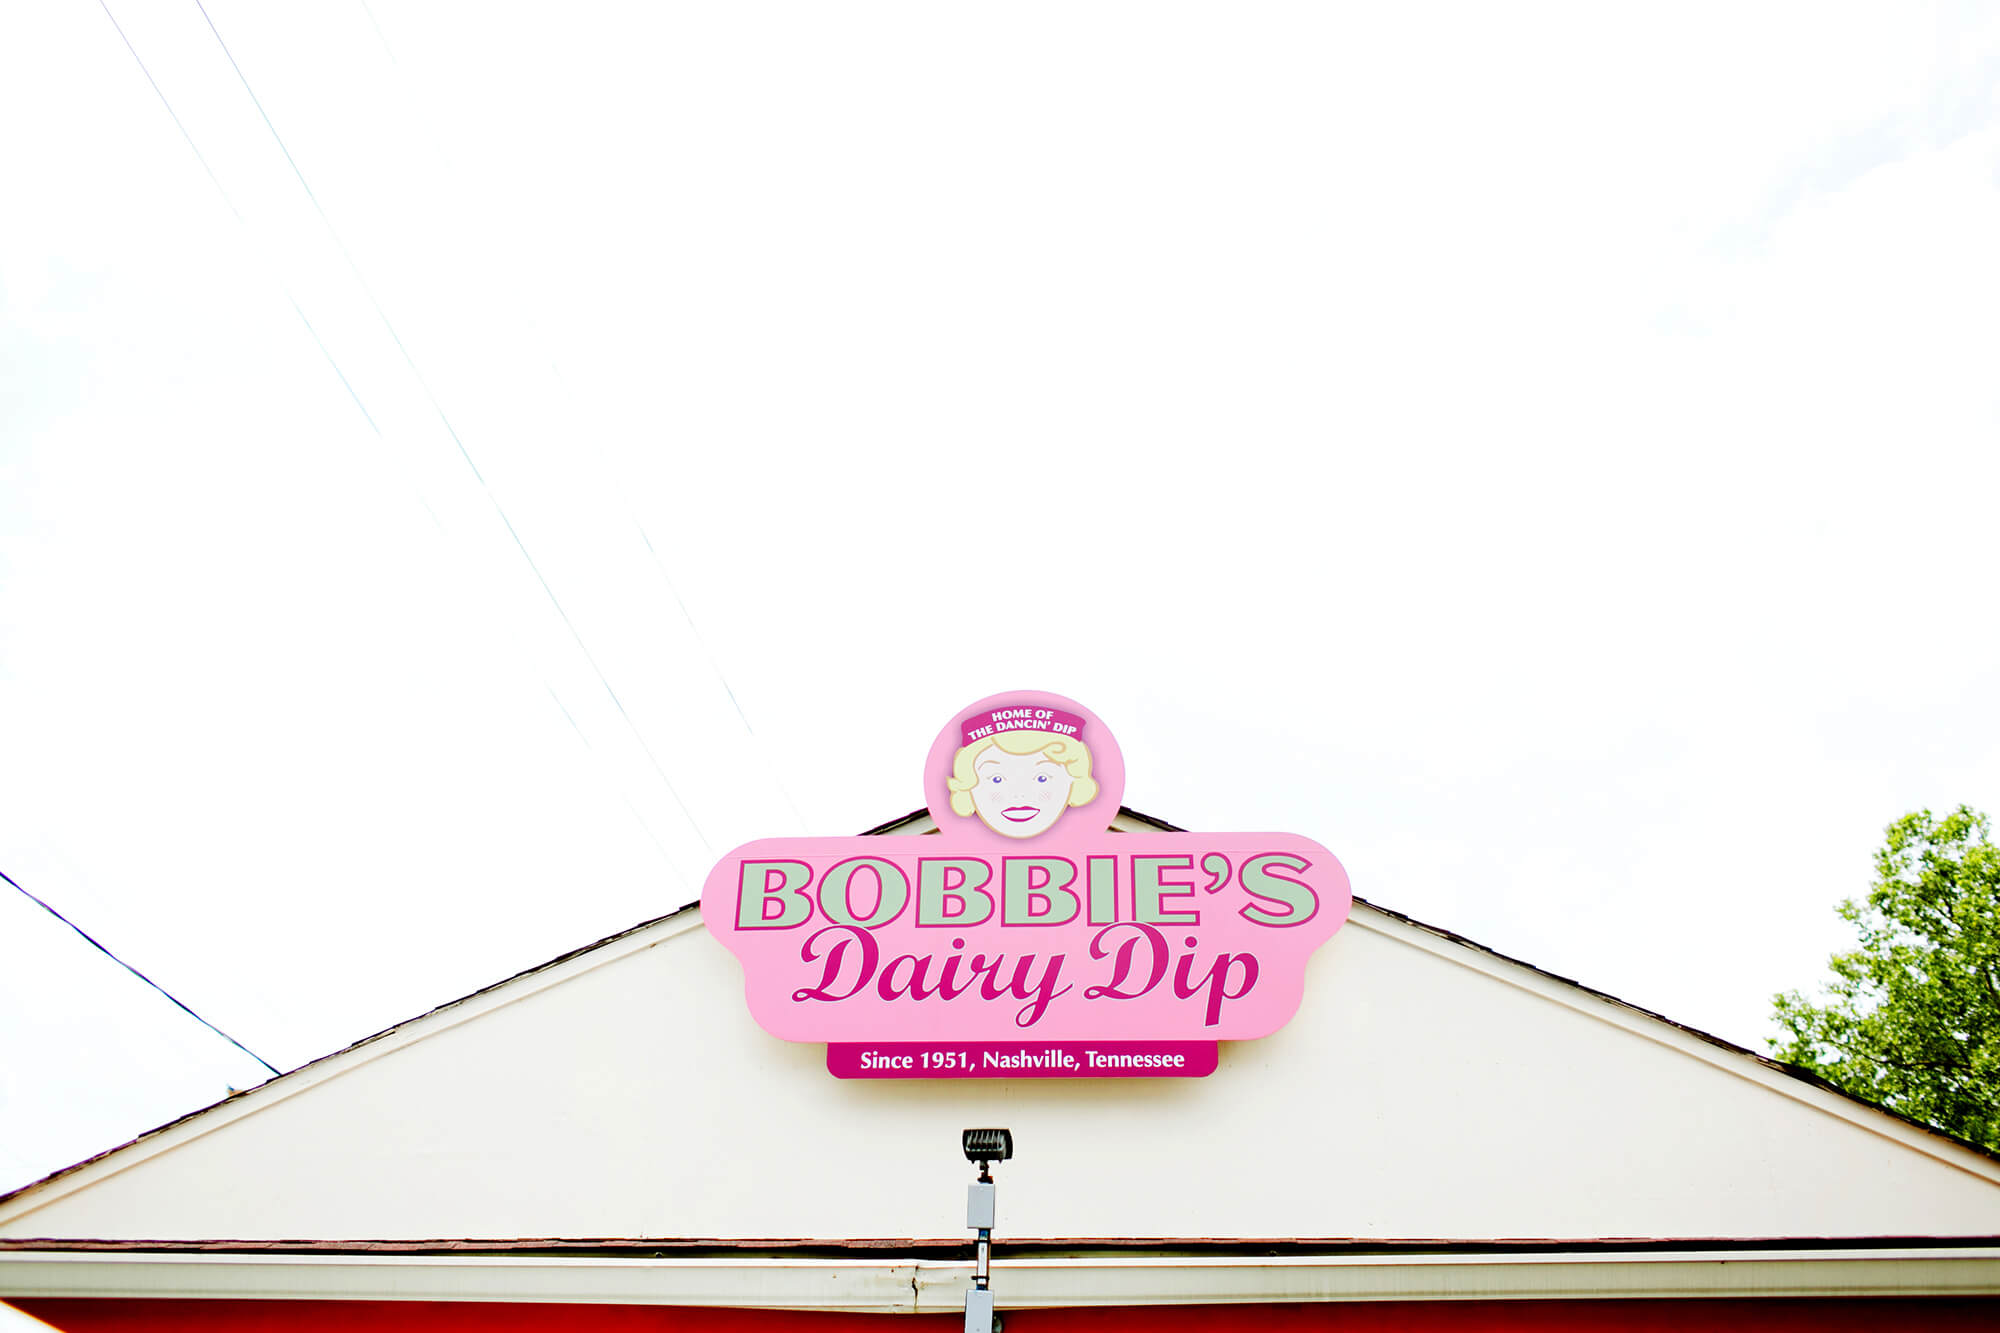 Bobby's Dairy Dip